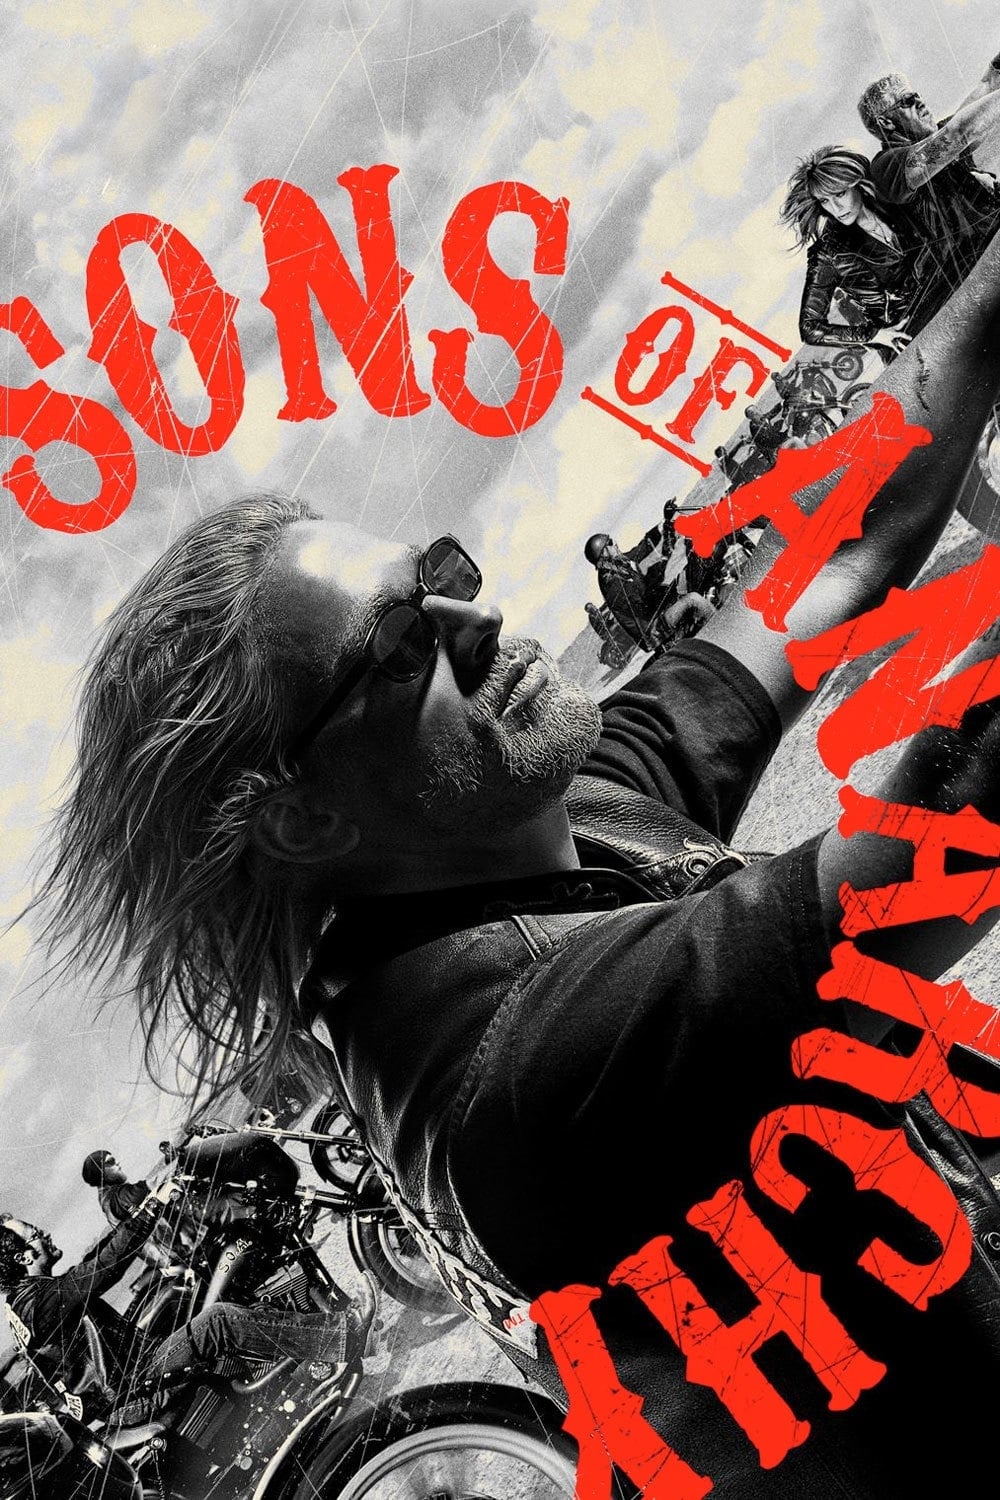 Sons of Anarchy (2008 - 2014) Seizoen 2 Disc 3 BD50